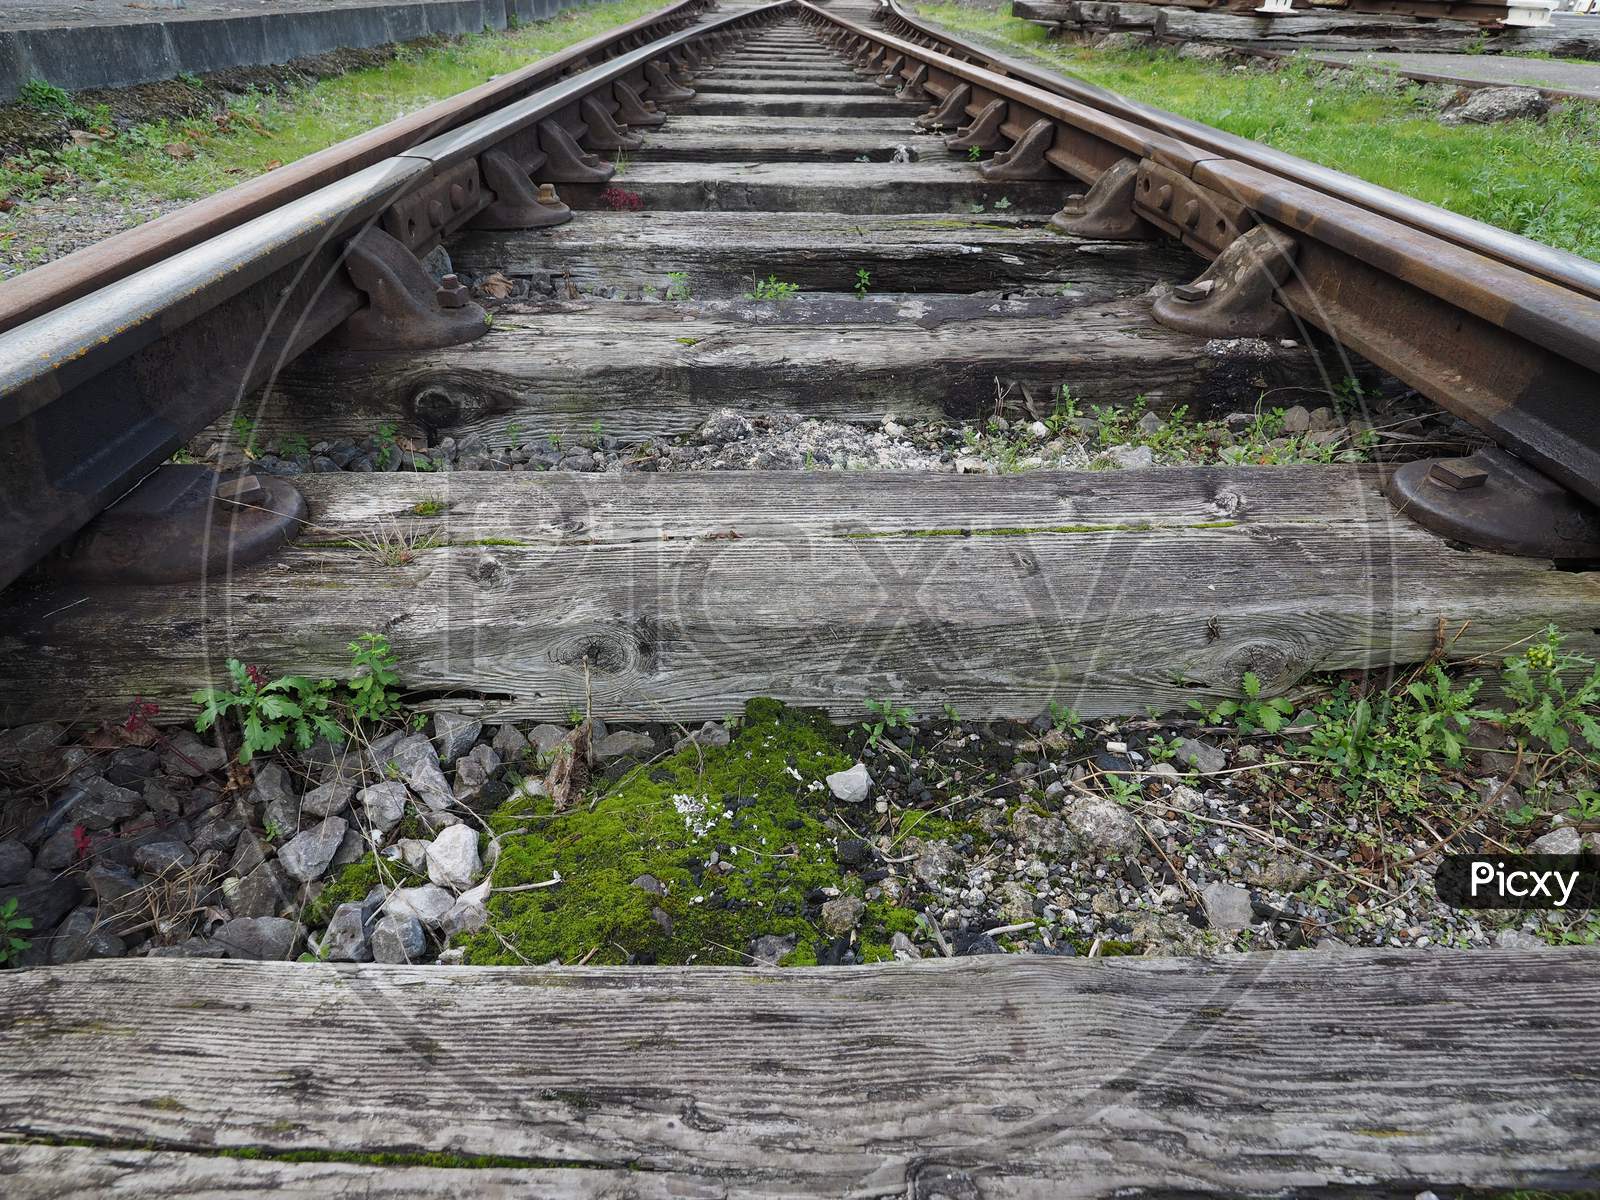 Railway Track Detail